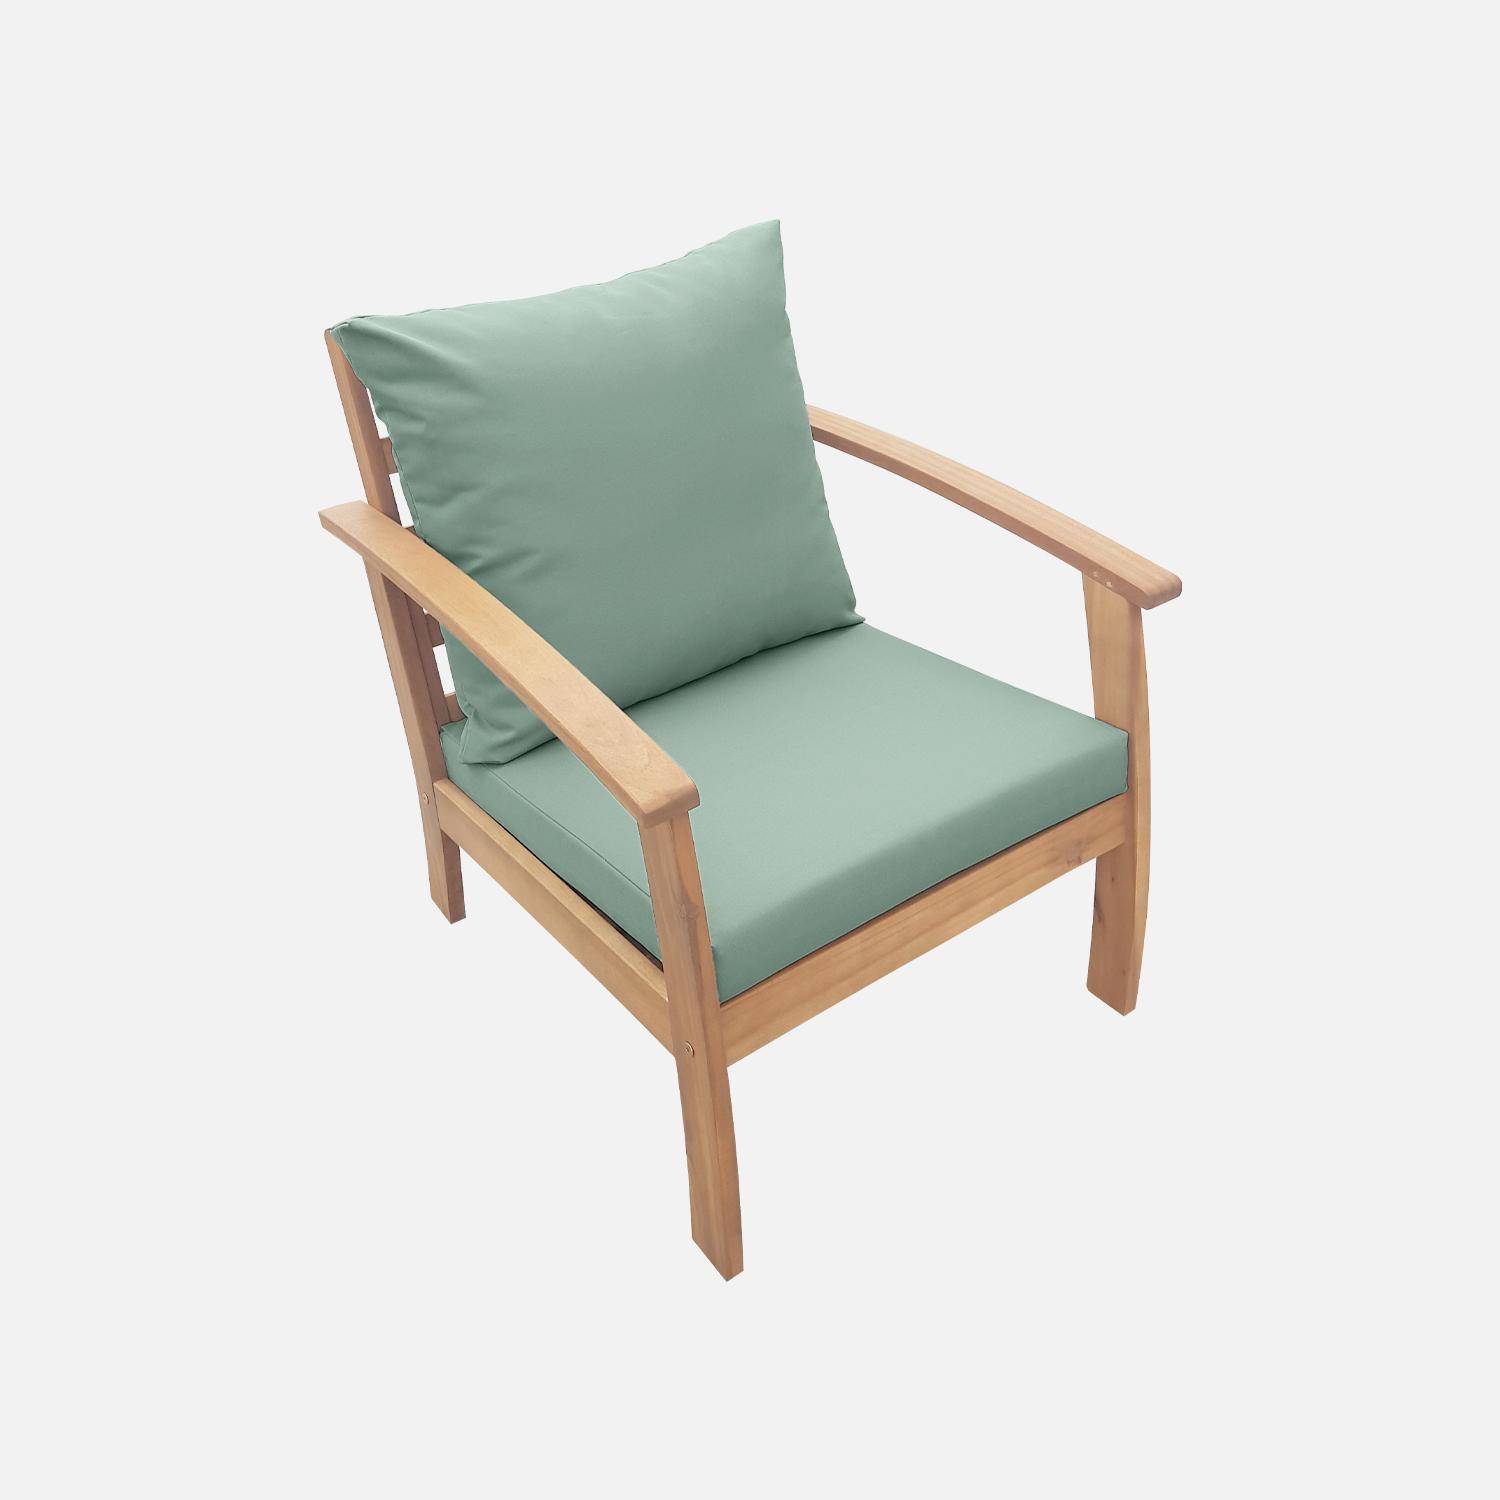 4-seater wooden garden sofa - Acacia wood sofa, armchairs and coffee table, designer piece  - Ushuaia - Sage green,sweeek,Photo4